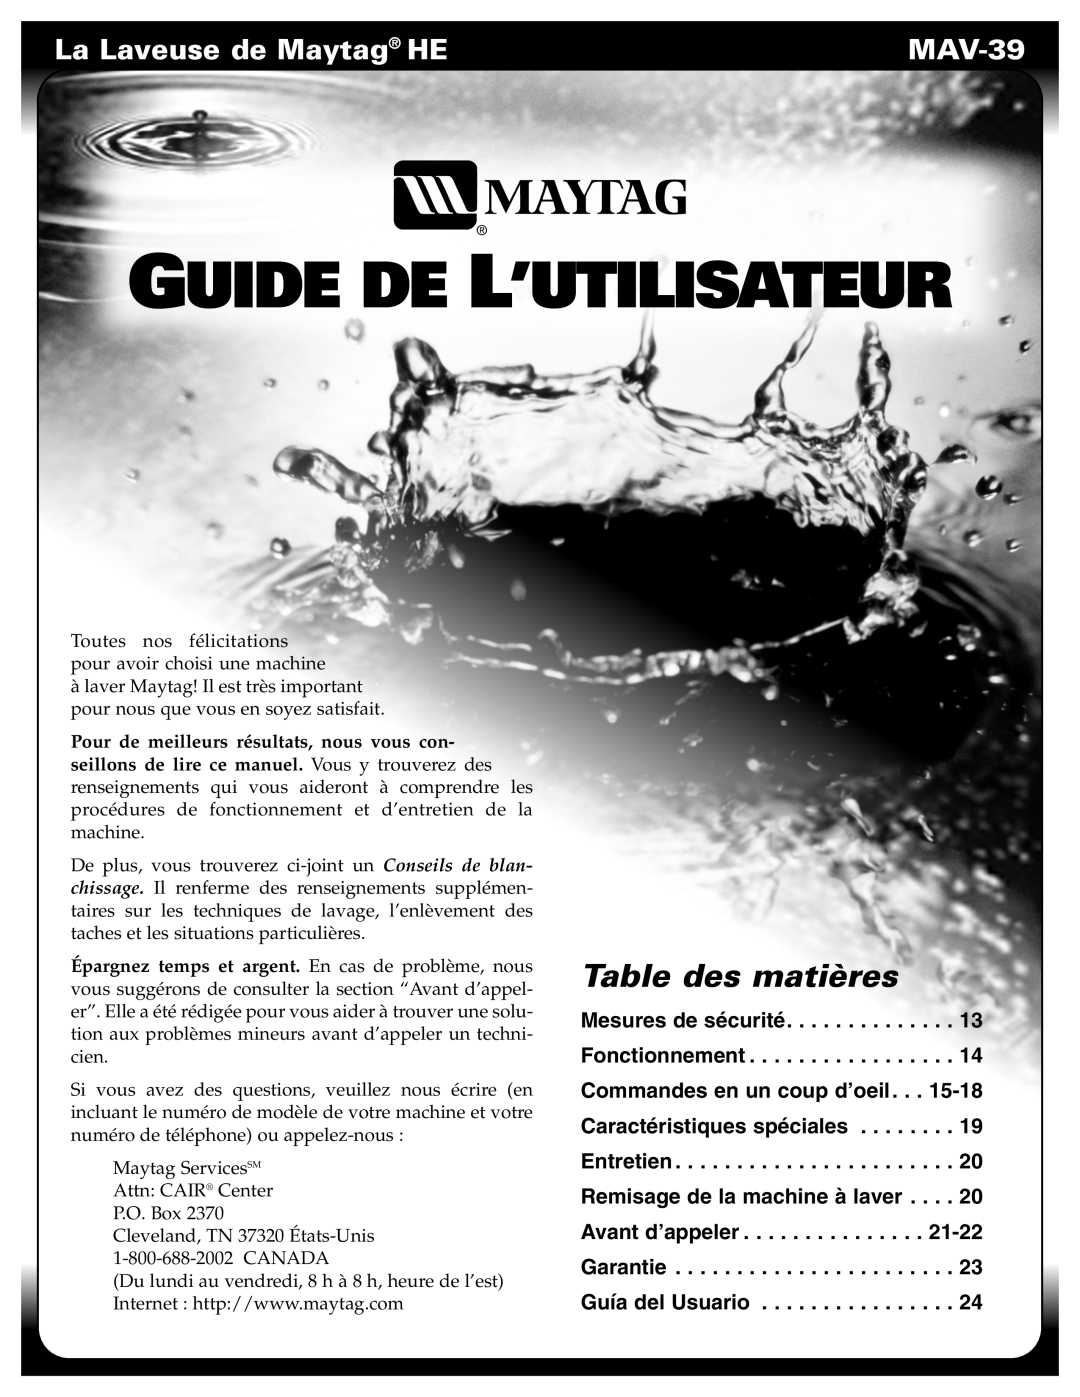 Maytag MAV-39 warranty Table des matières, La Laveuse de Maytag HE, Guide De L’Utilisateur 